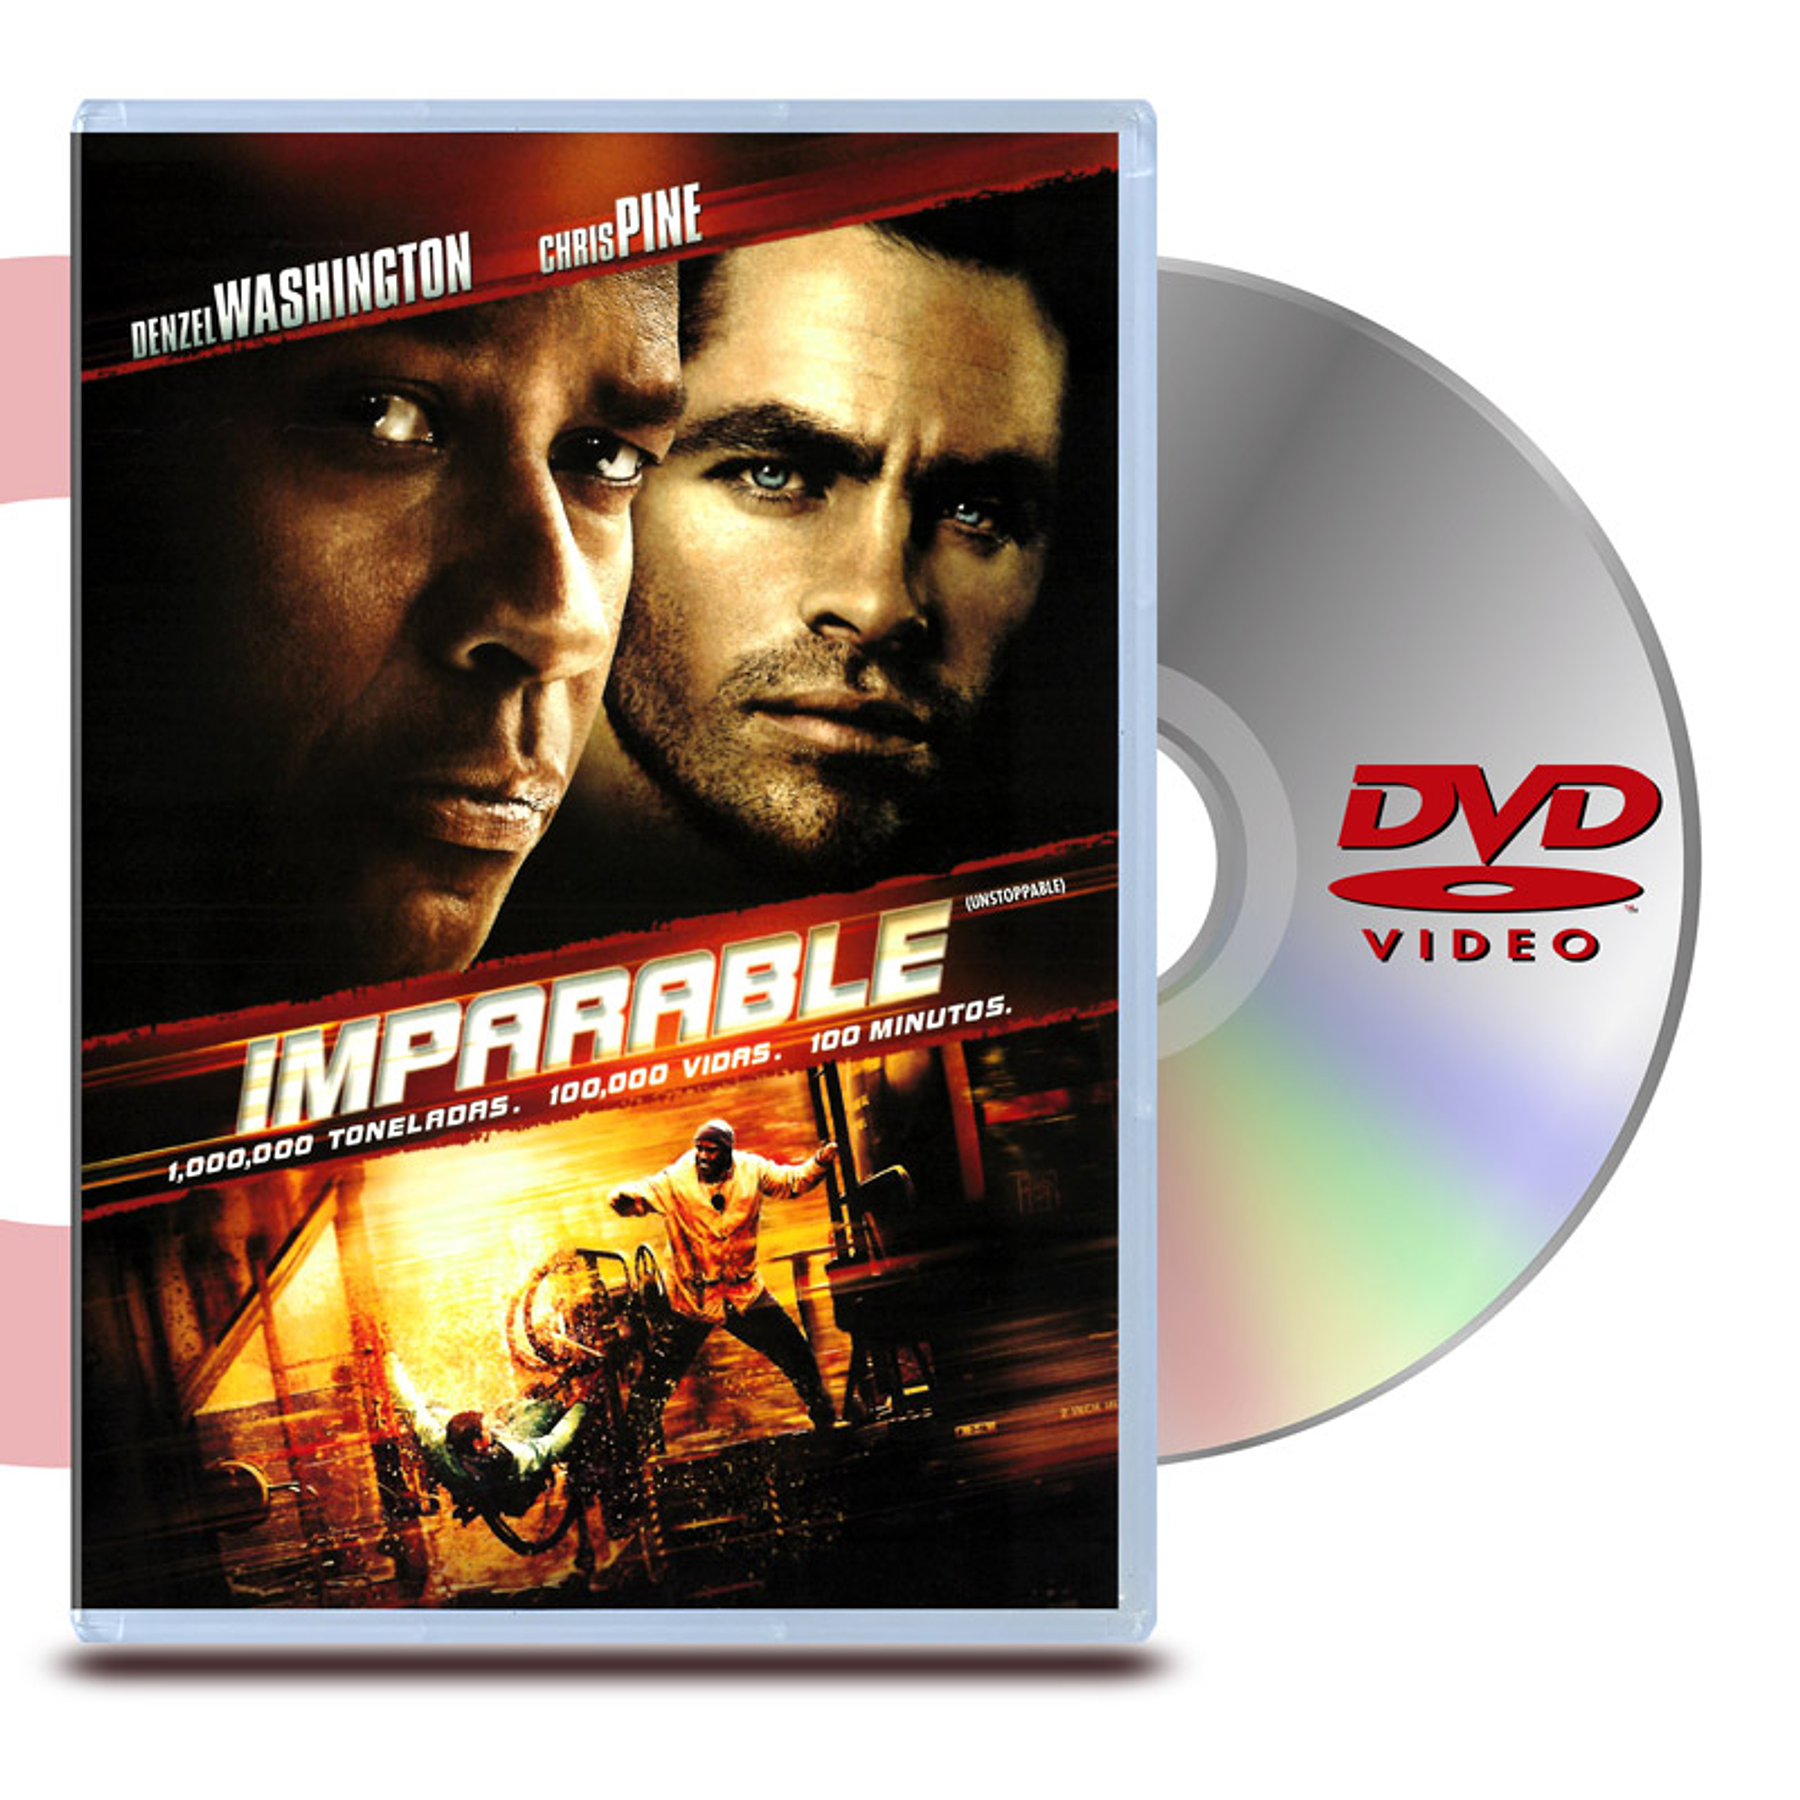 DVD IMPARABLE